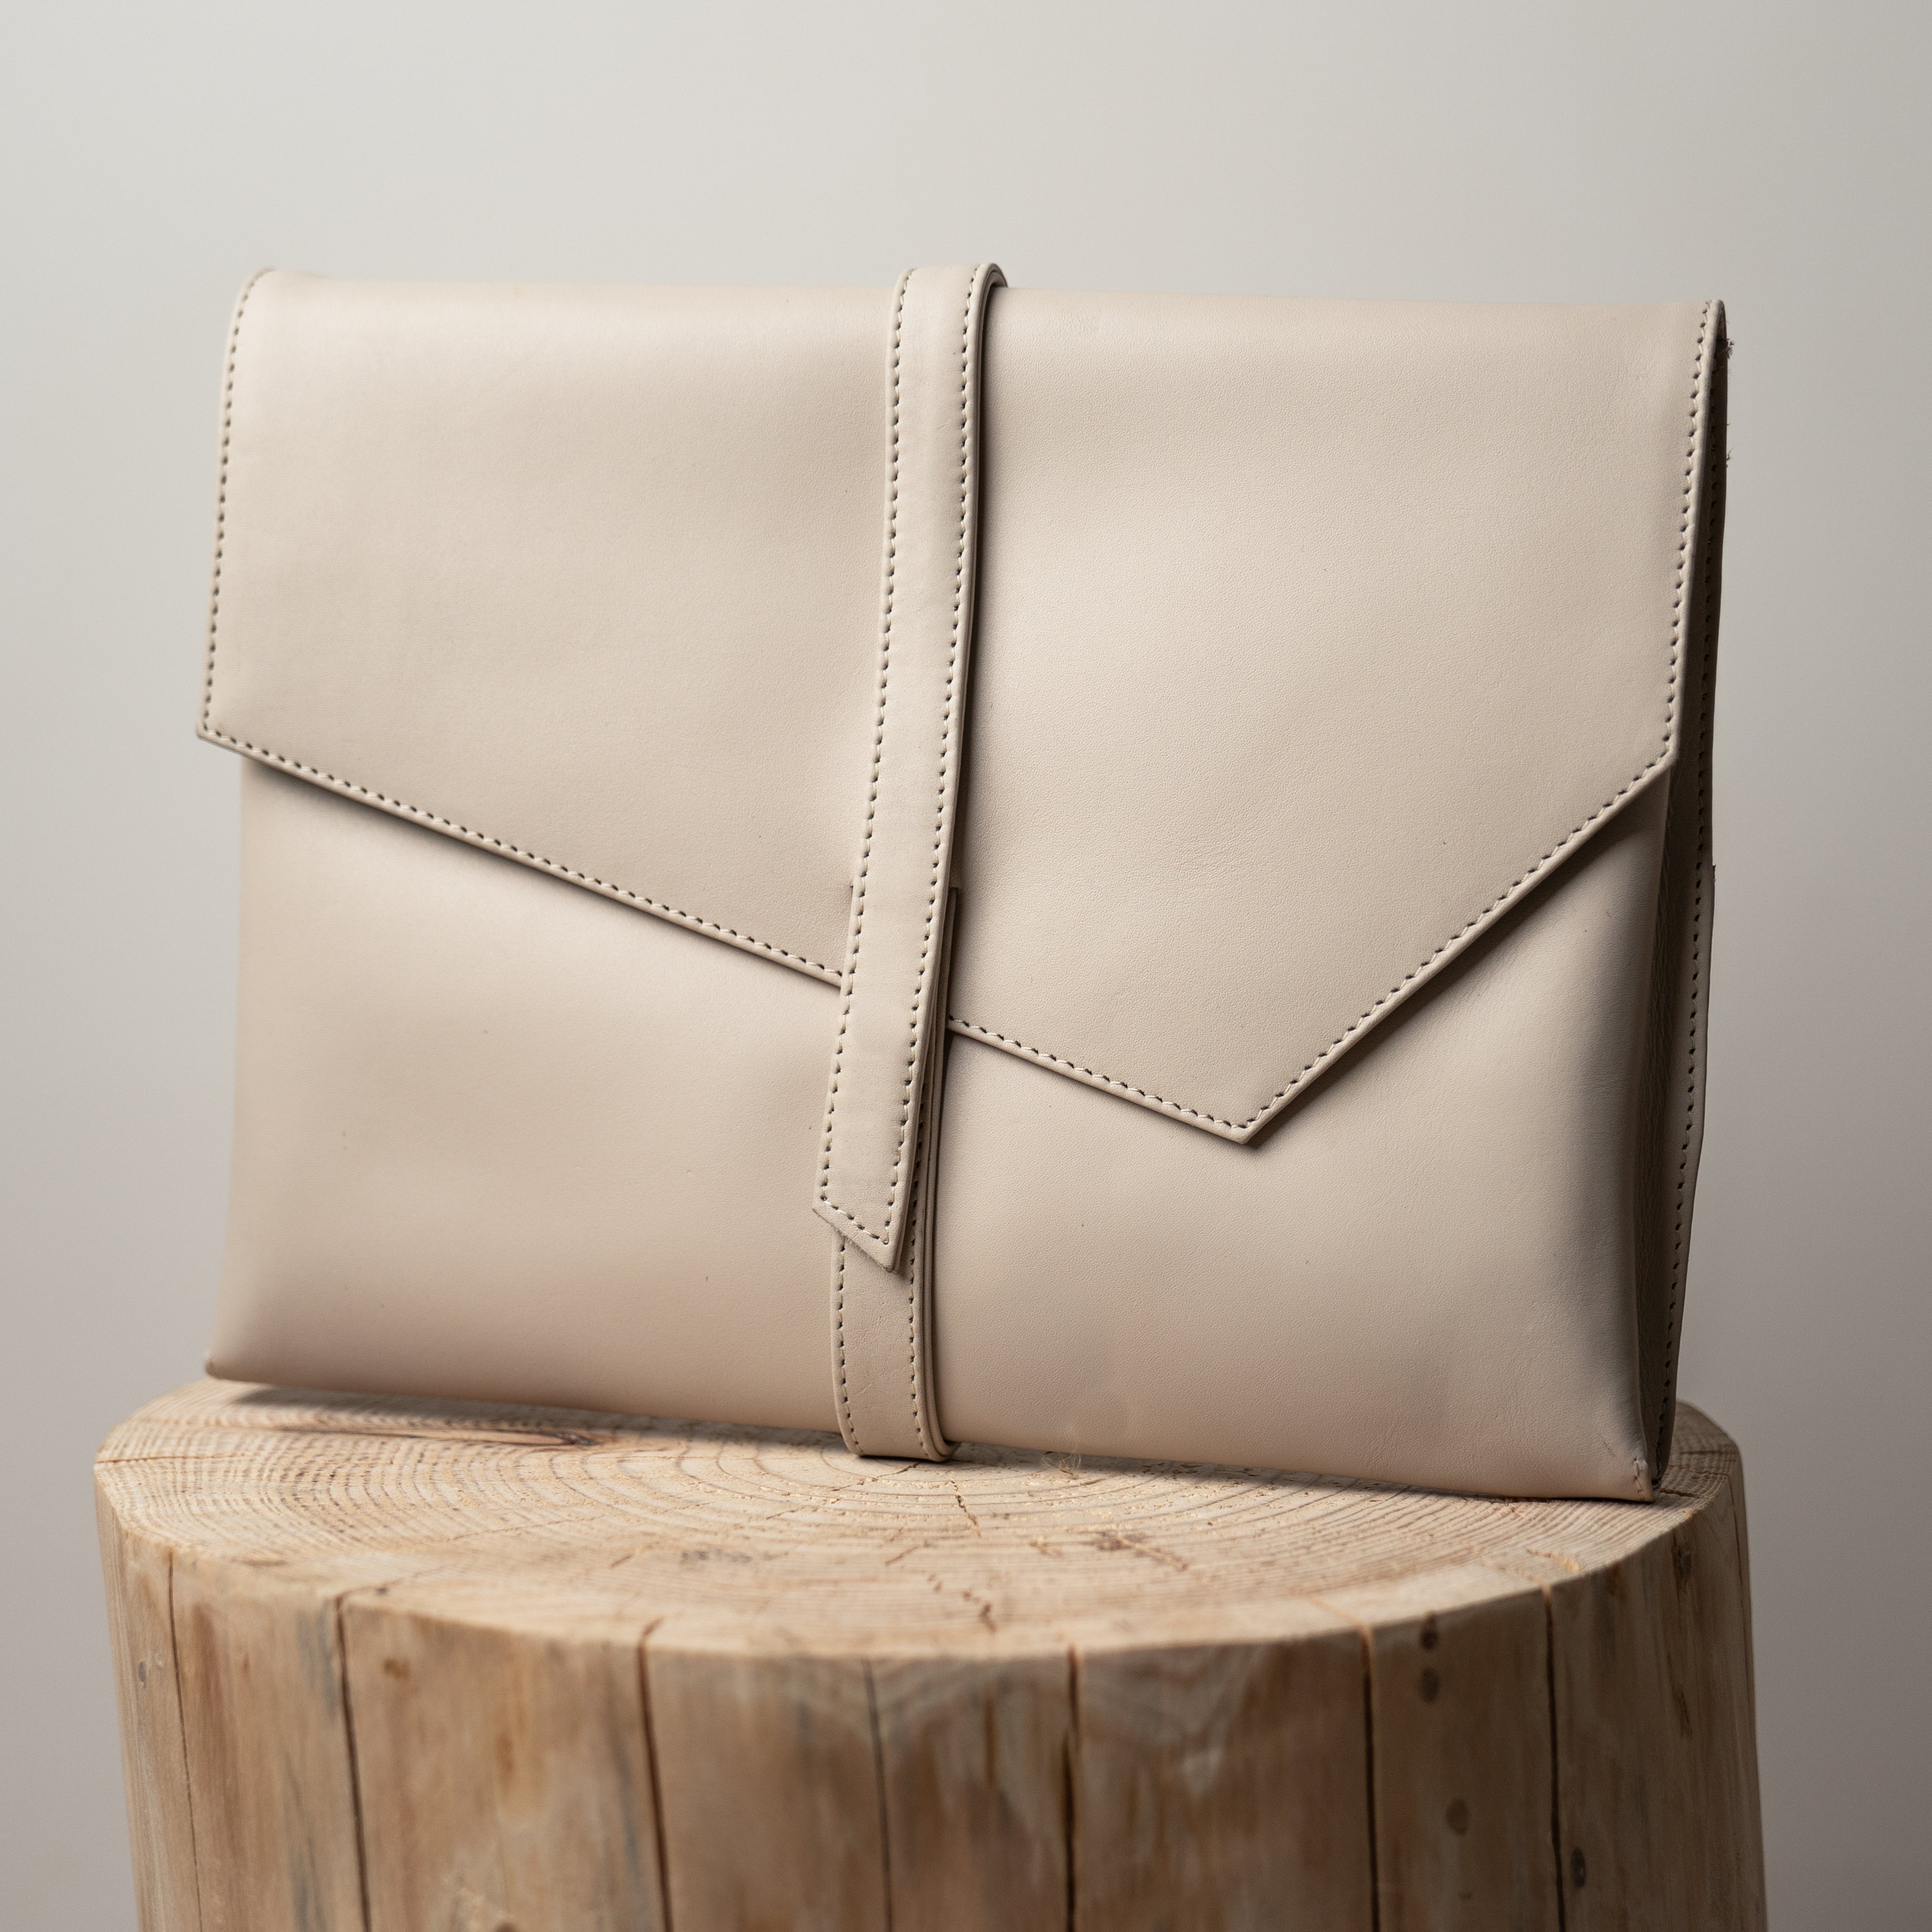 Maidan Leather Clutch Bag - Stone White